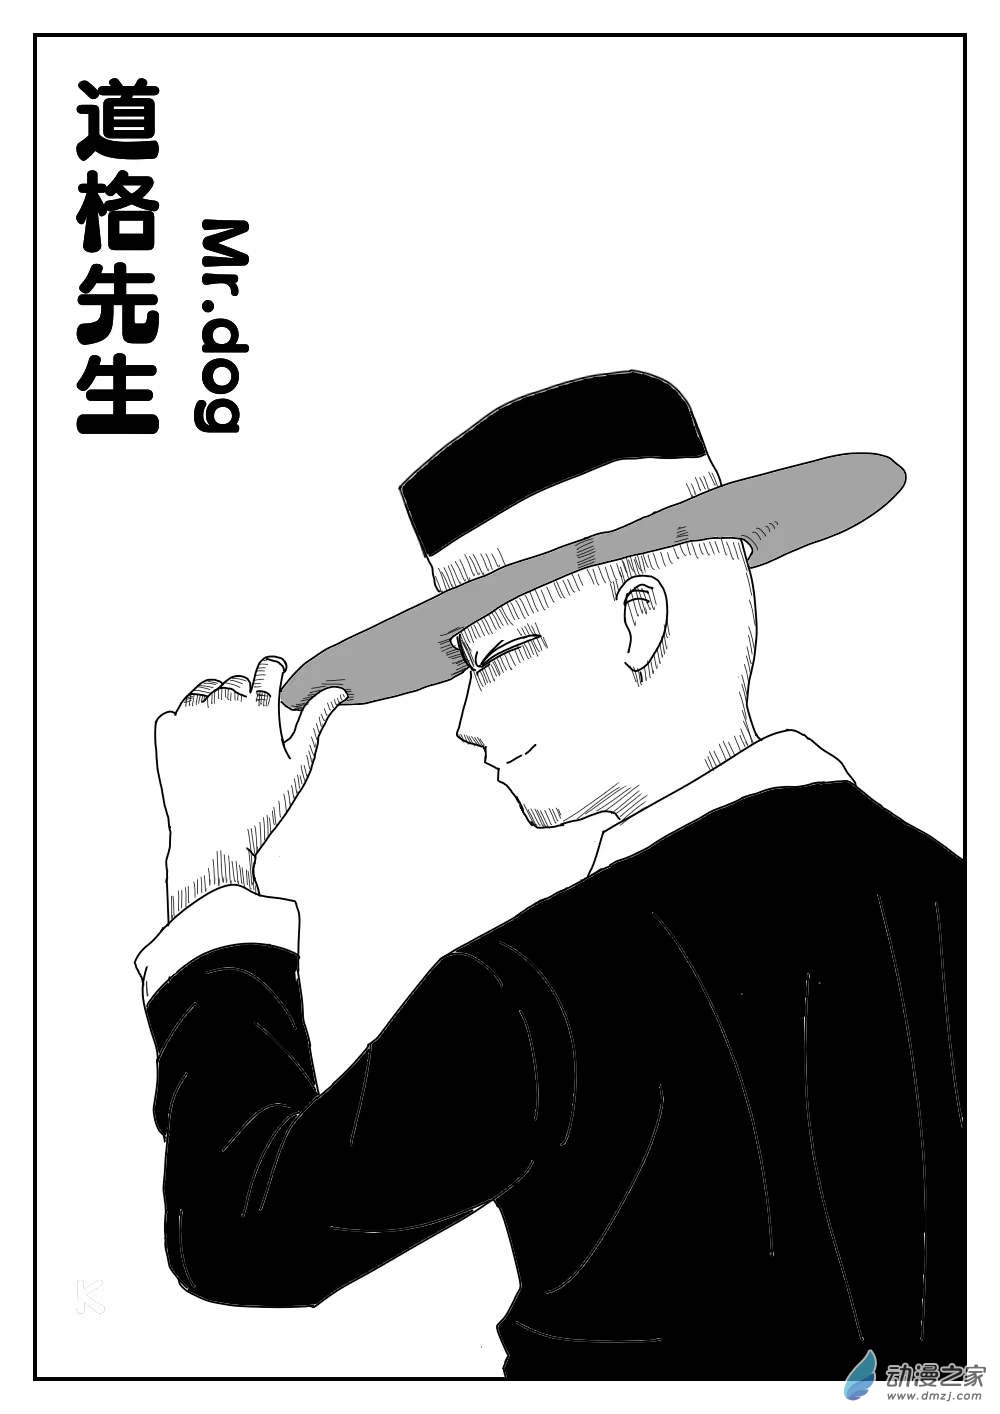 K神的短篇漫畫集 - 02 道格先生 - 3